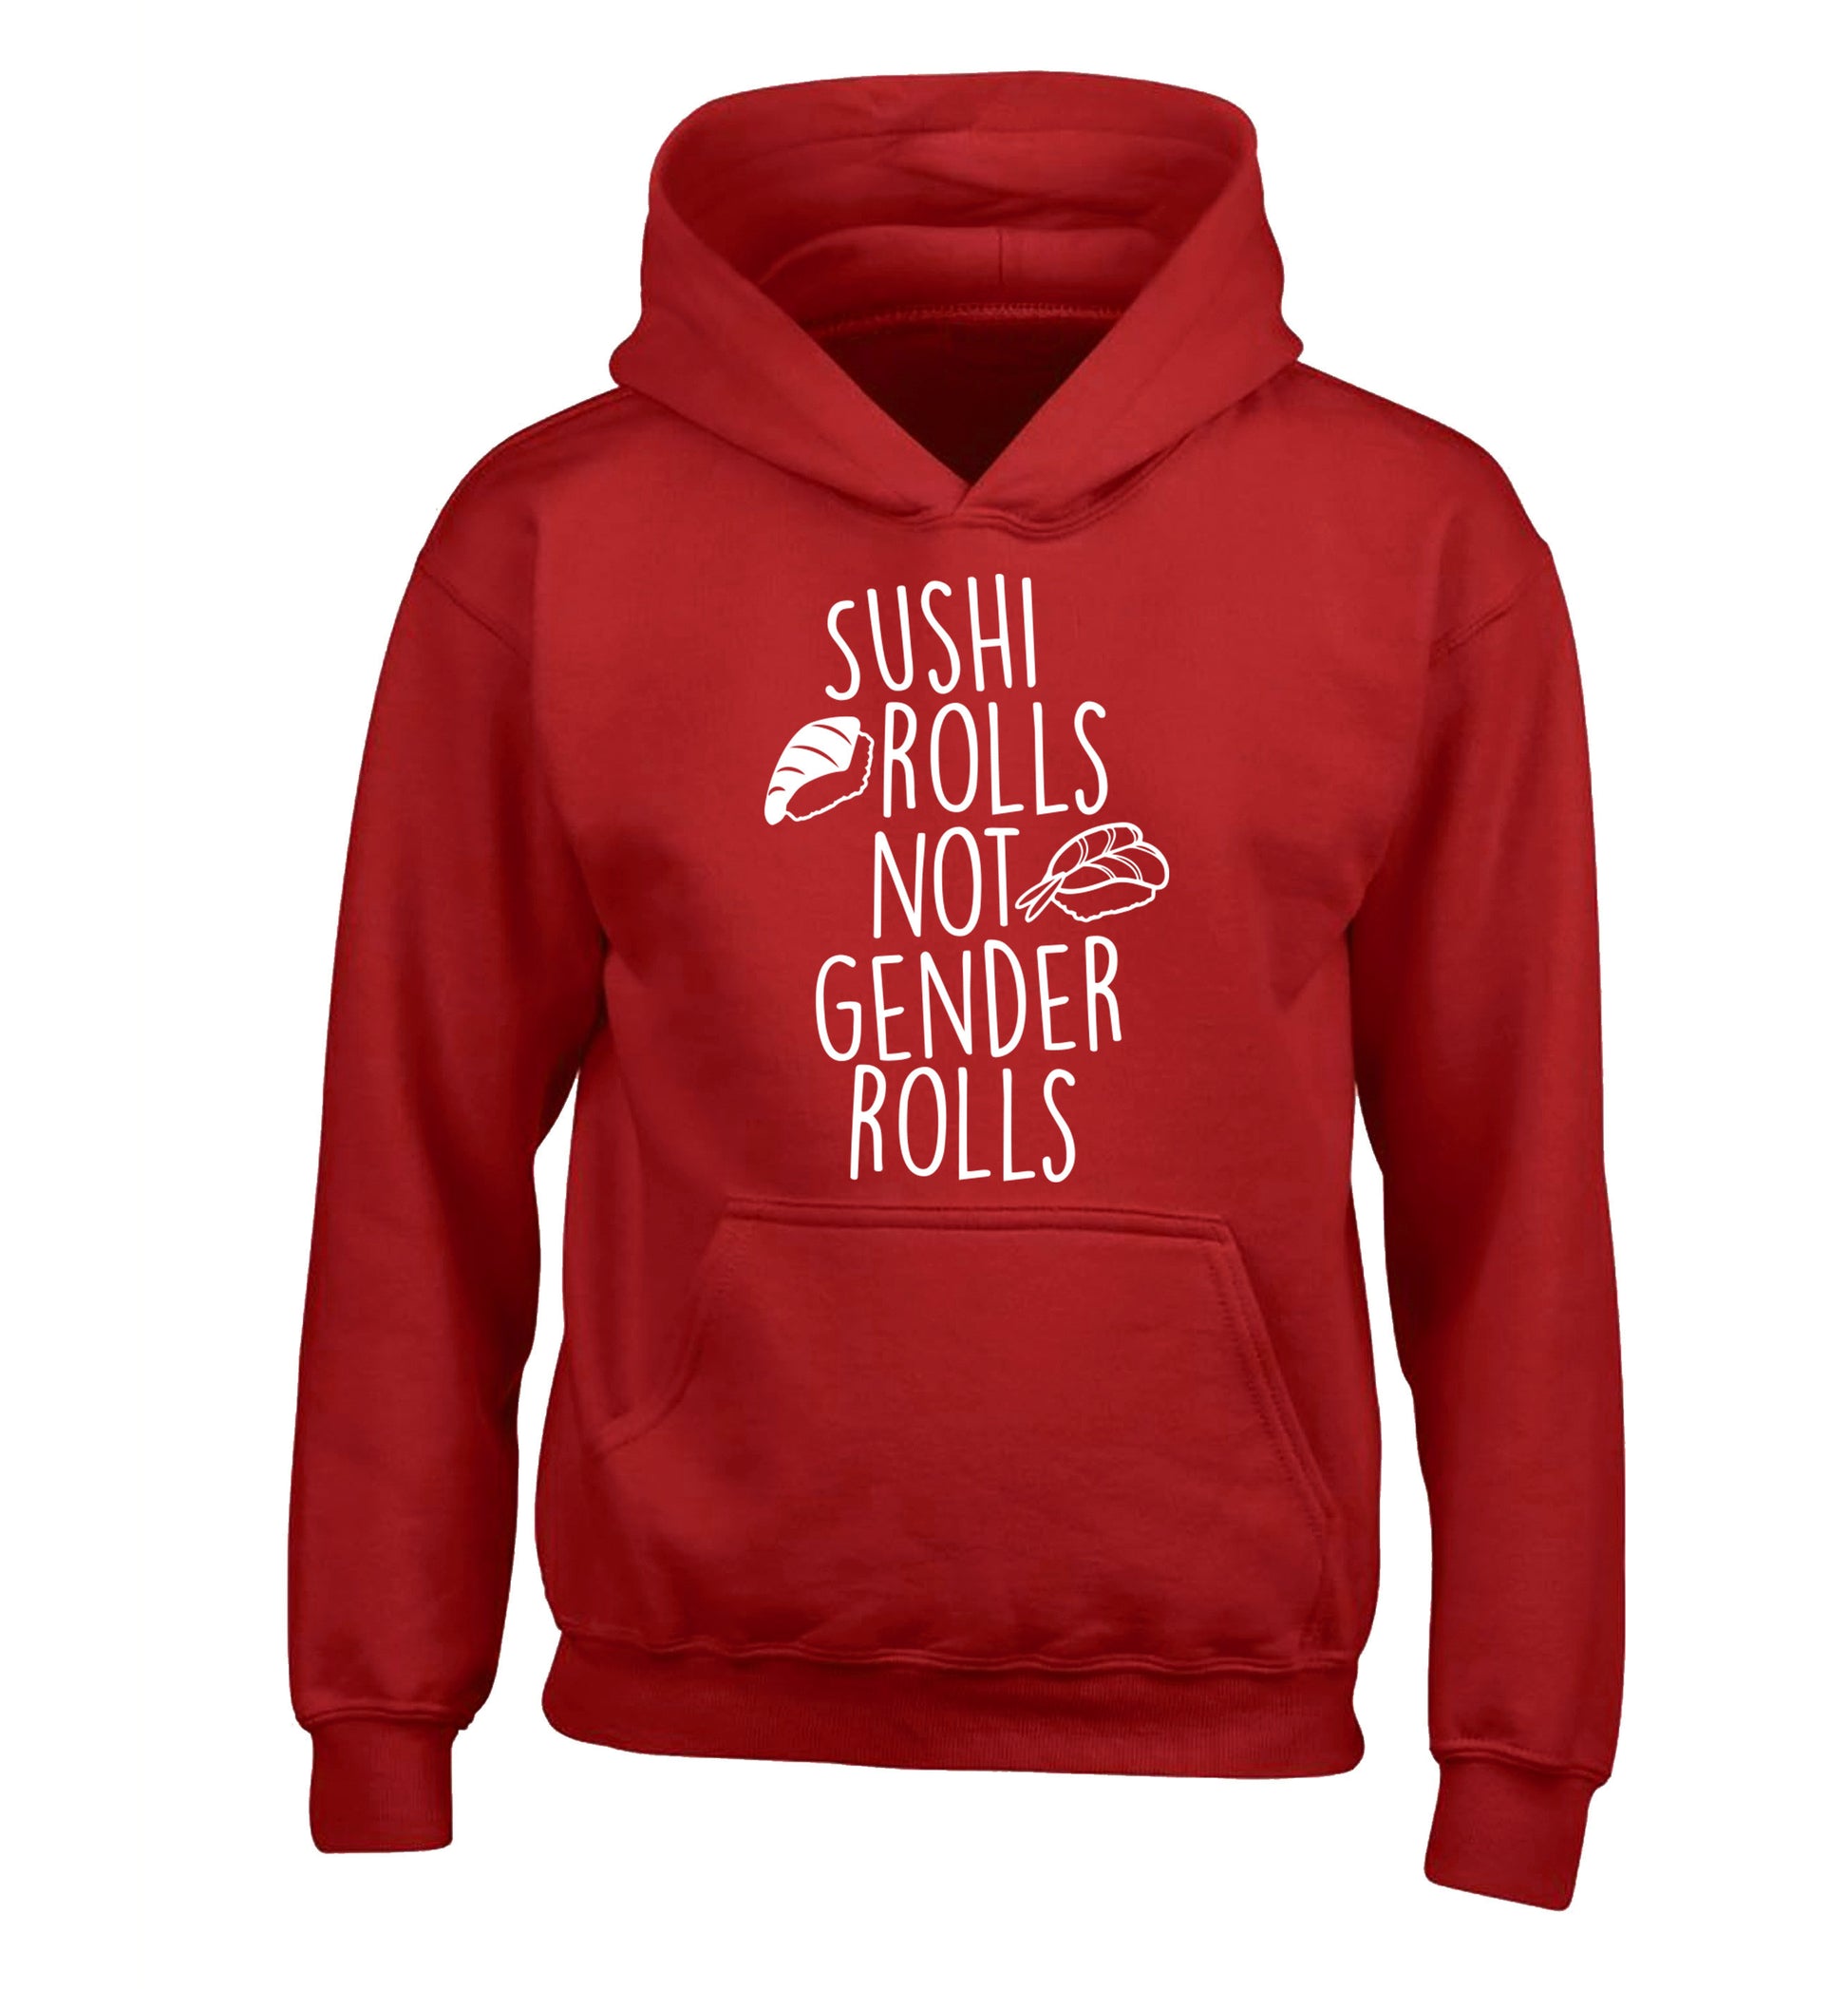 Sushi rolls not gender rolls children's red hoodie 12-14 Years